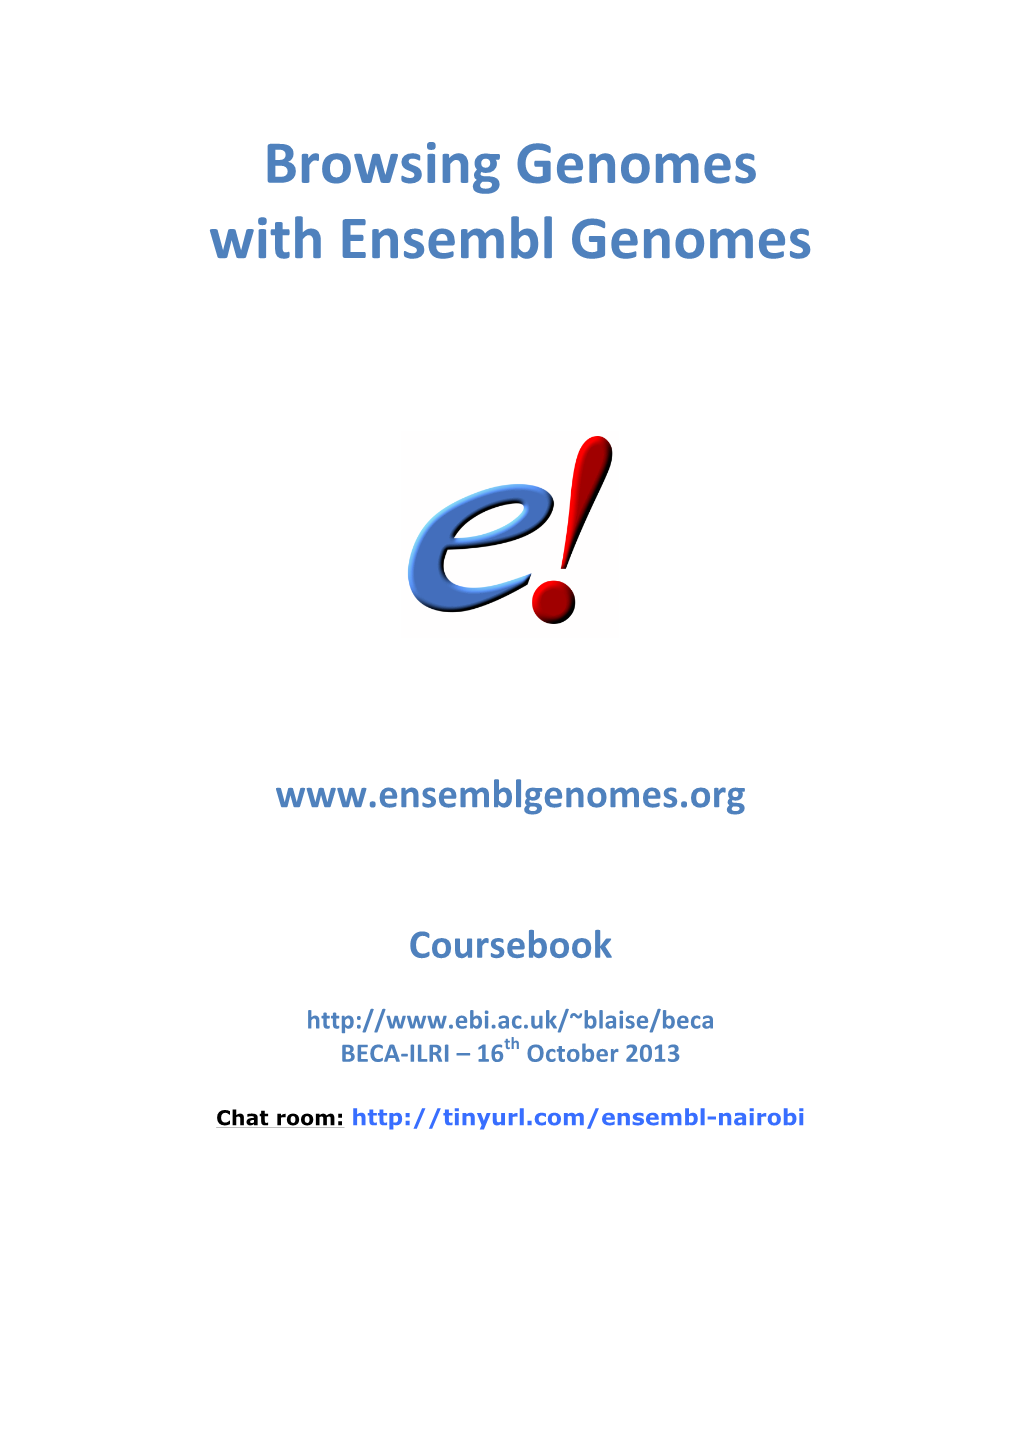 Browsing Genomes with Ensembl Genomes